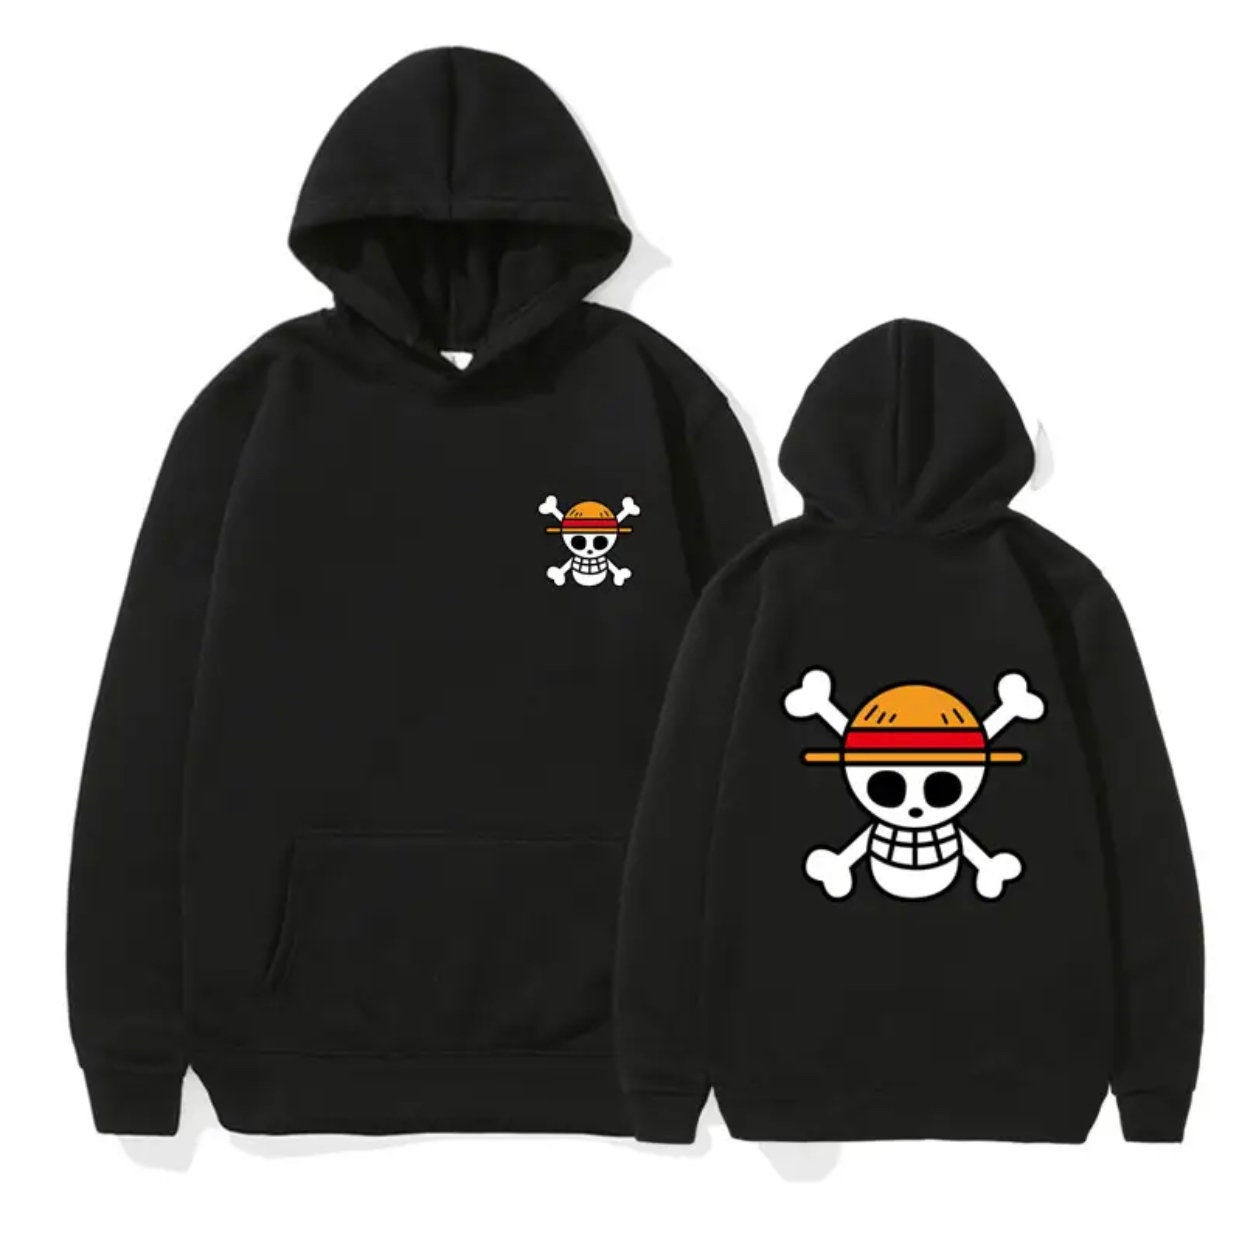 Monkey D Luffy Nike Shirt One Piece Anime Clothing Anime x Nike Swoosh  Sweatshirt  Small Gifts Great Love